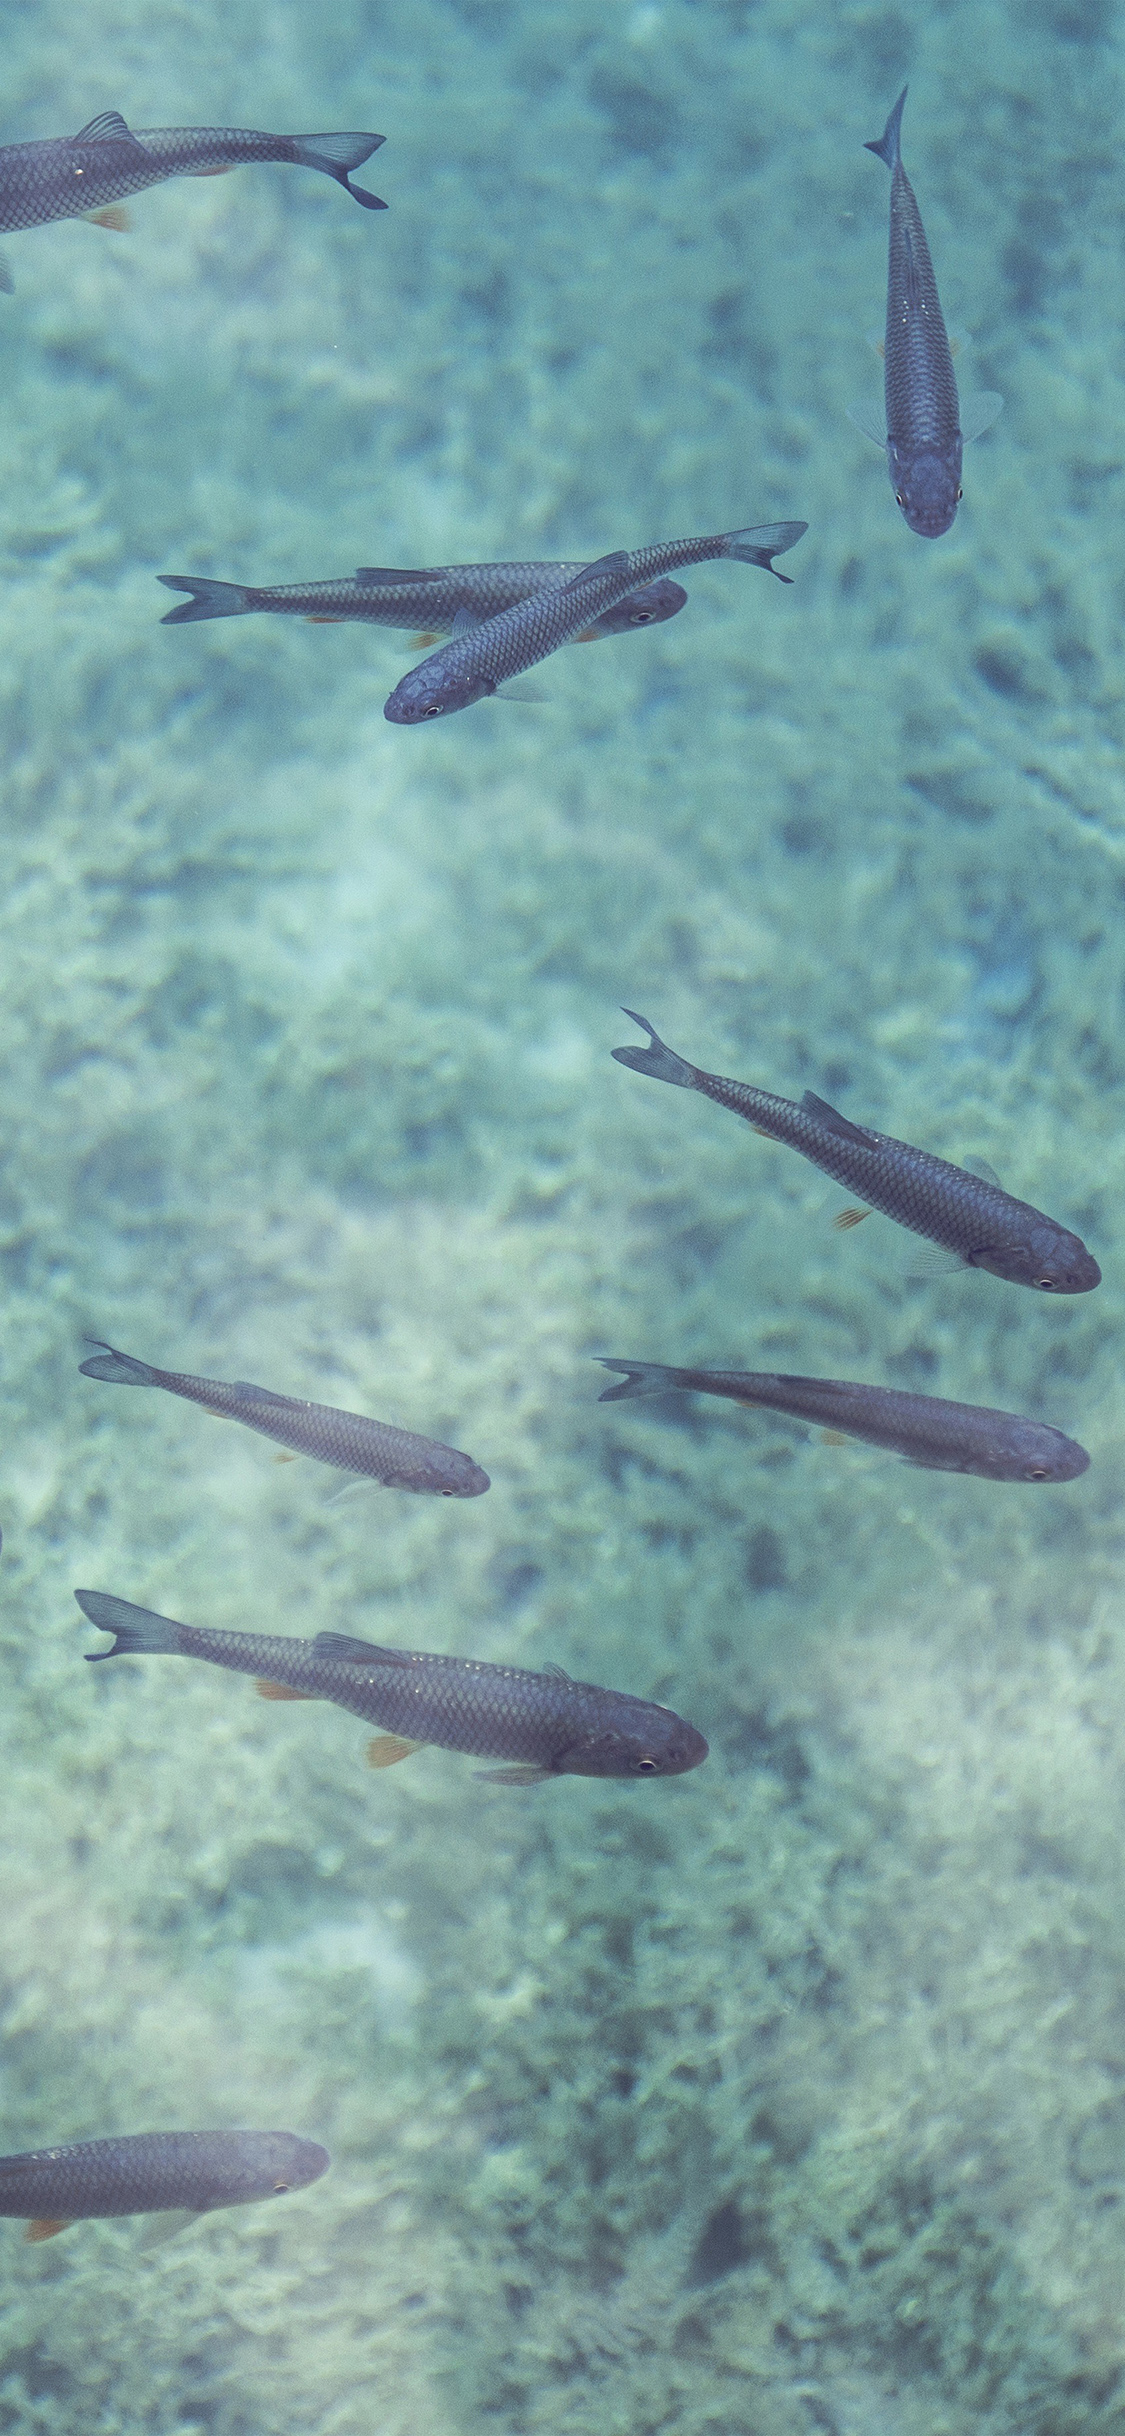 iPhone X wallpaper. fish sea water nature blue